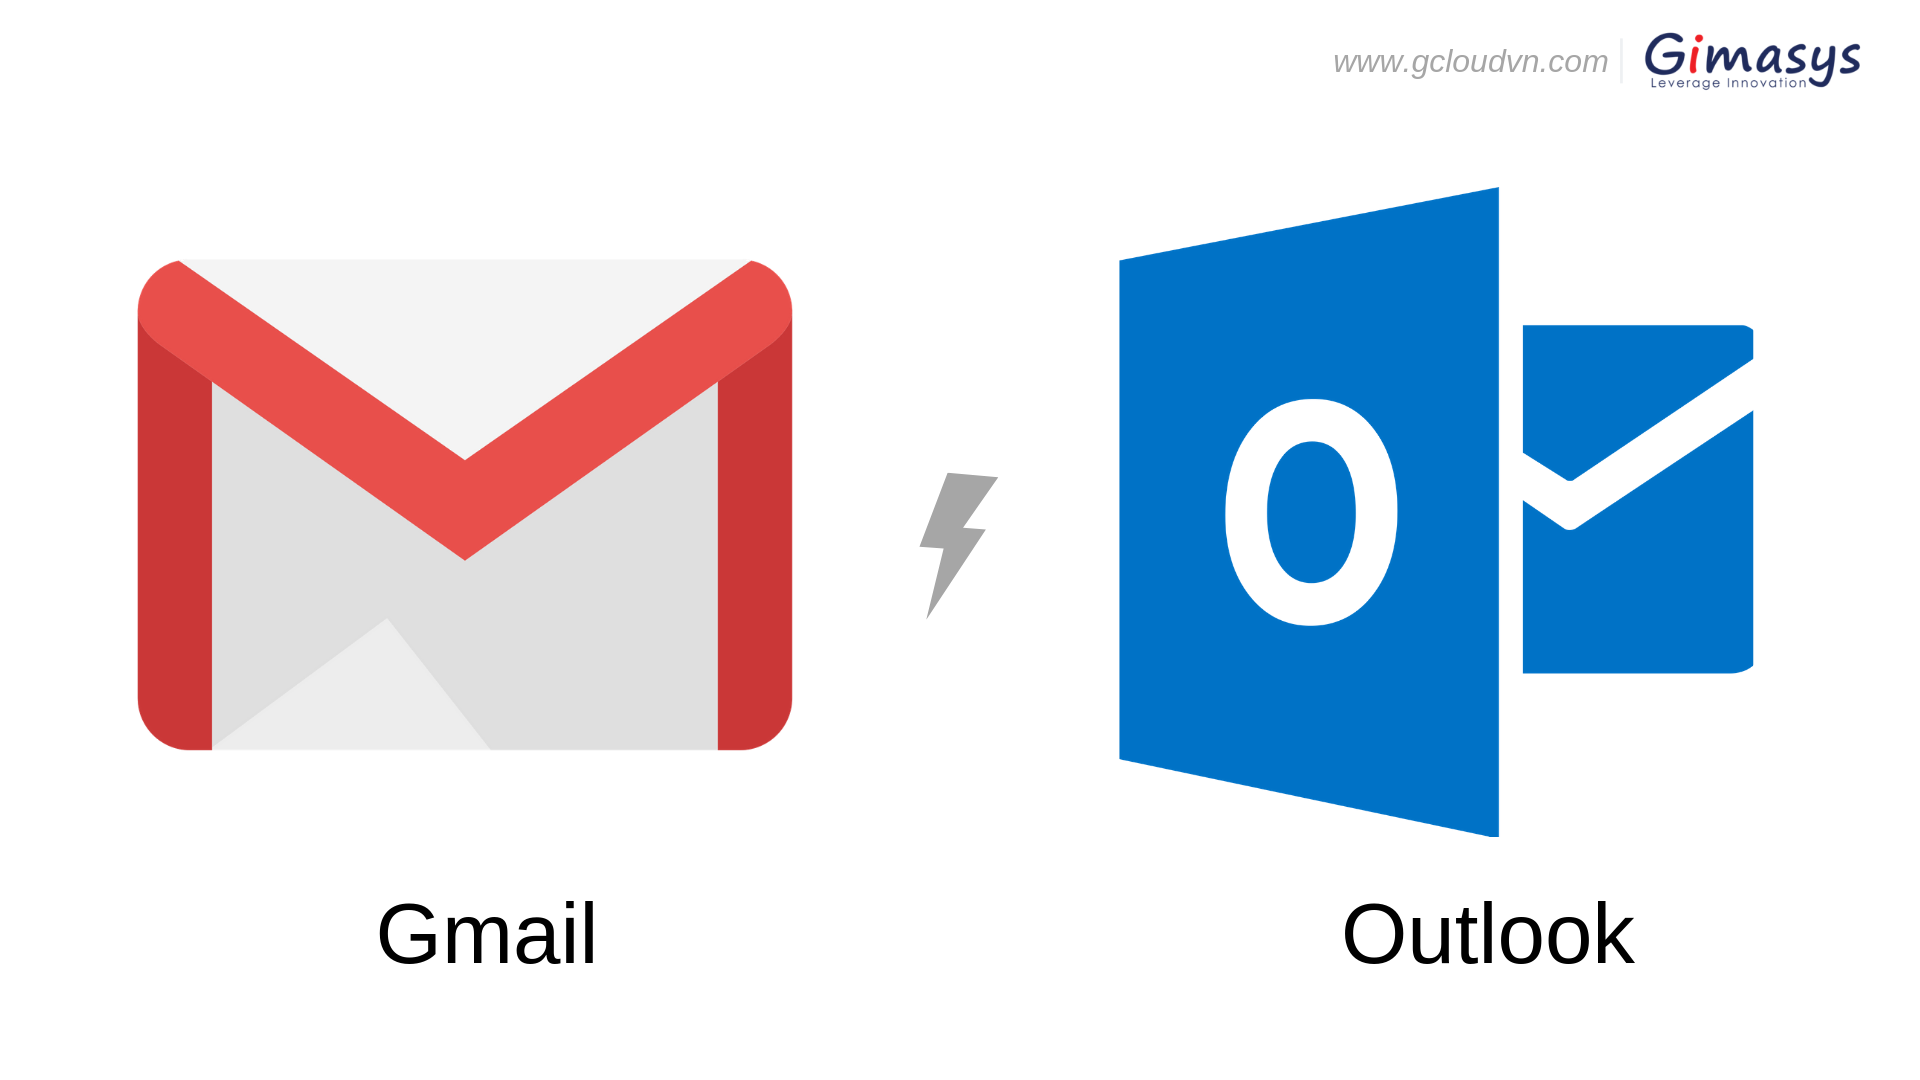 F gmail com. Значок электронной почты. Значок Outlook. Значок почты гмайл.